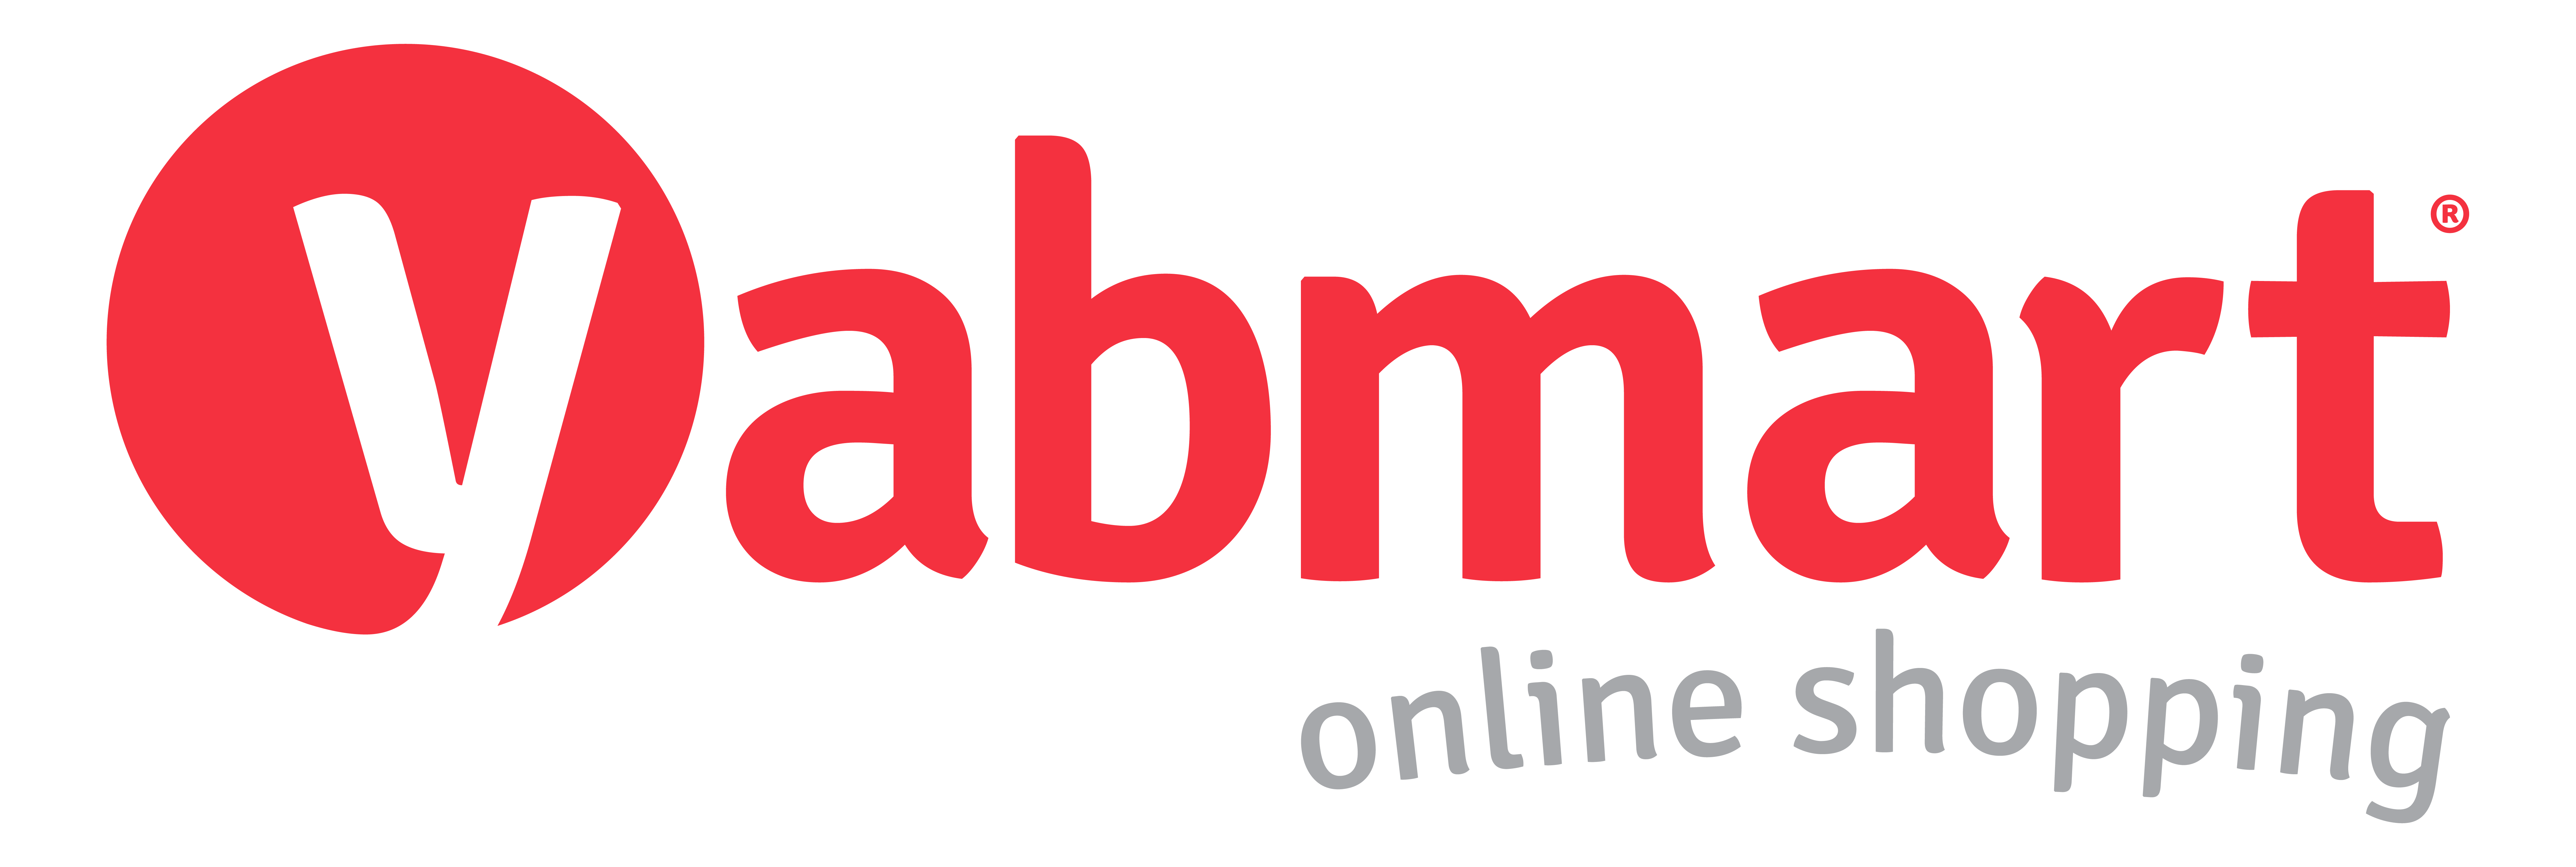 Yabmart Online Shopping